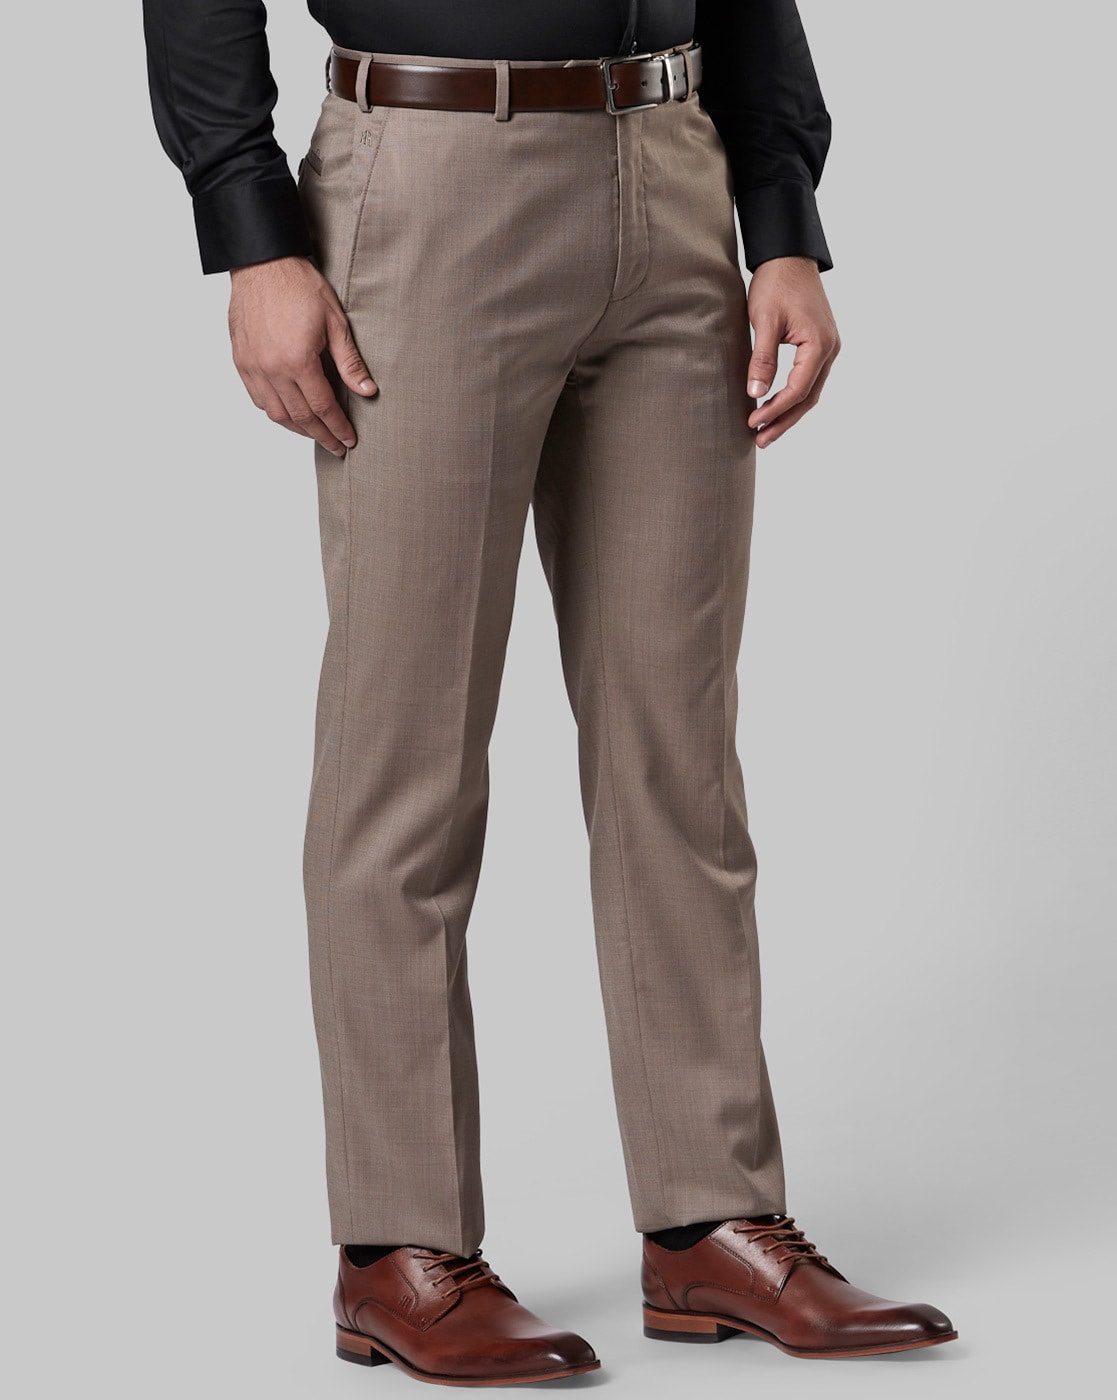 Buy Beige Trousers & Pants for Men by RAYMOND Online | Ajio.com